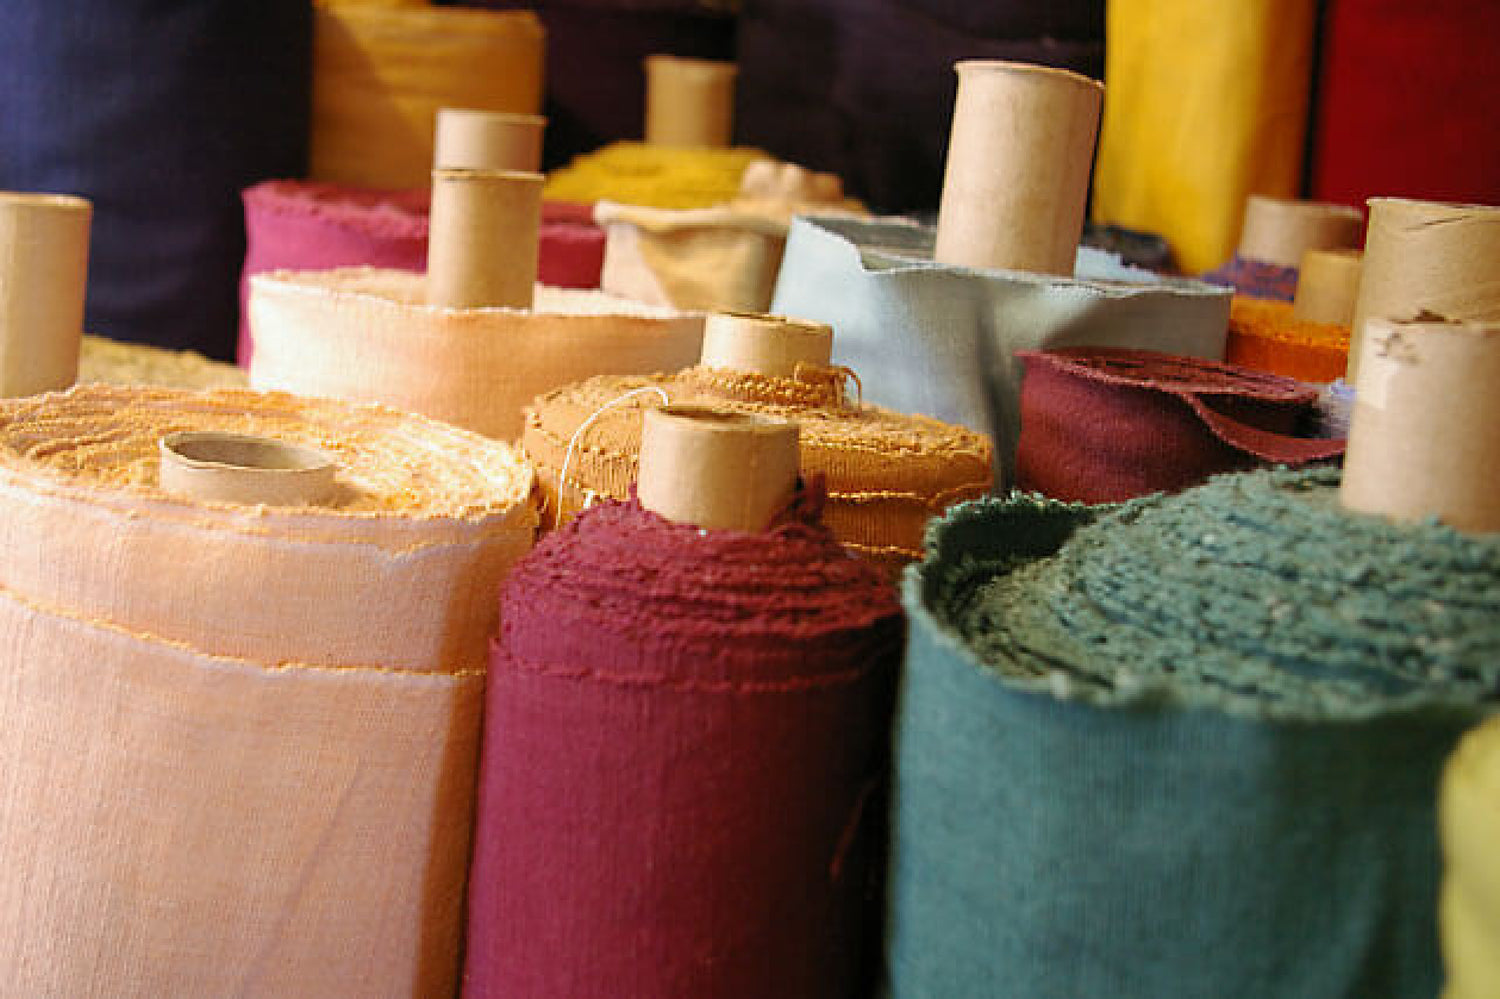 UALinen uses 100% pure linen fabrics